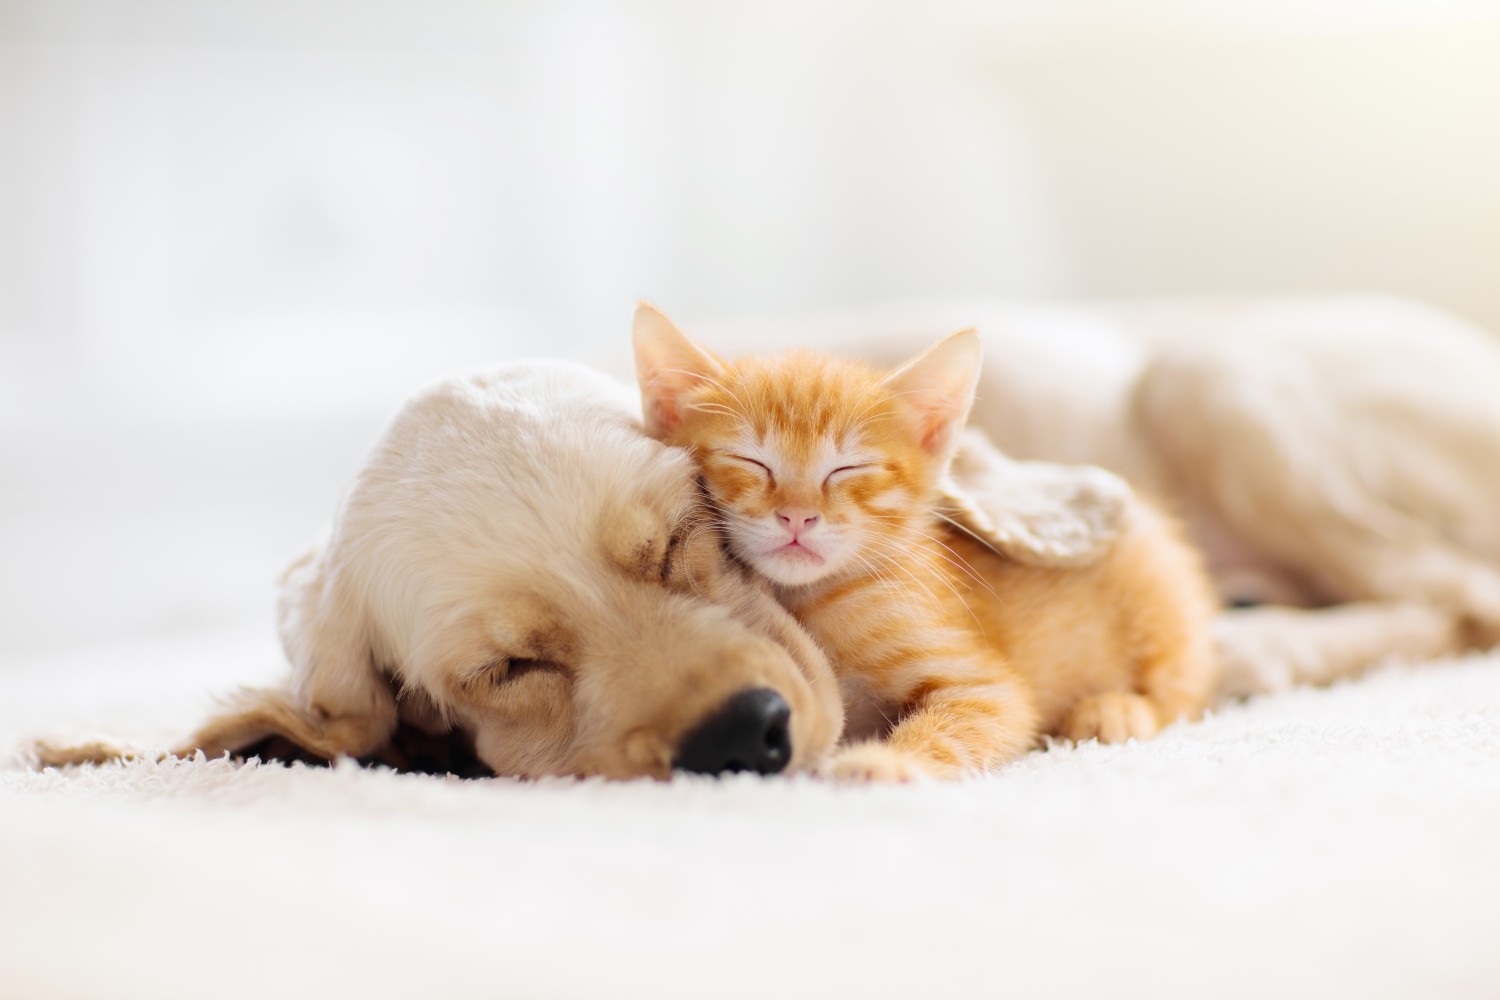 Puppy and Kitten Cuddling